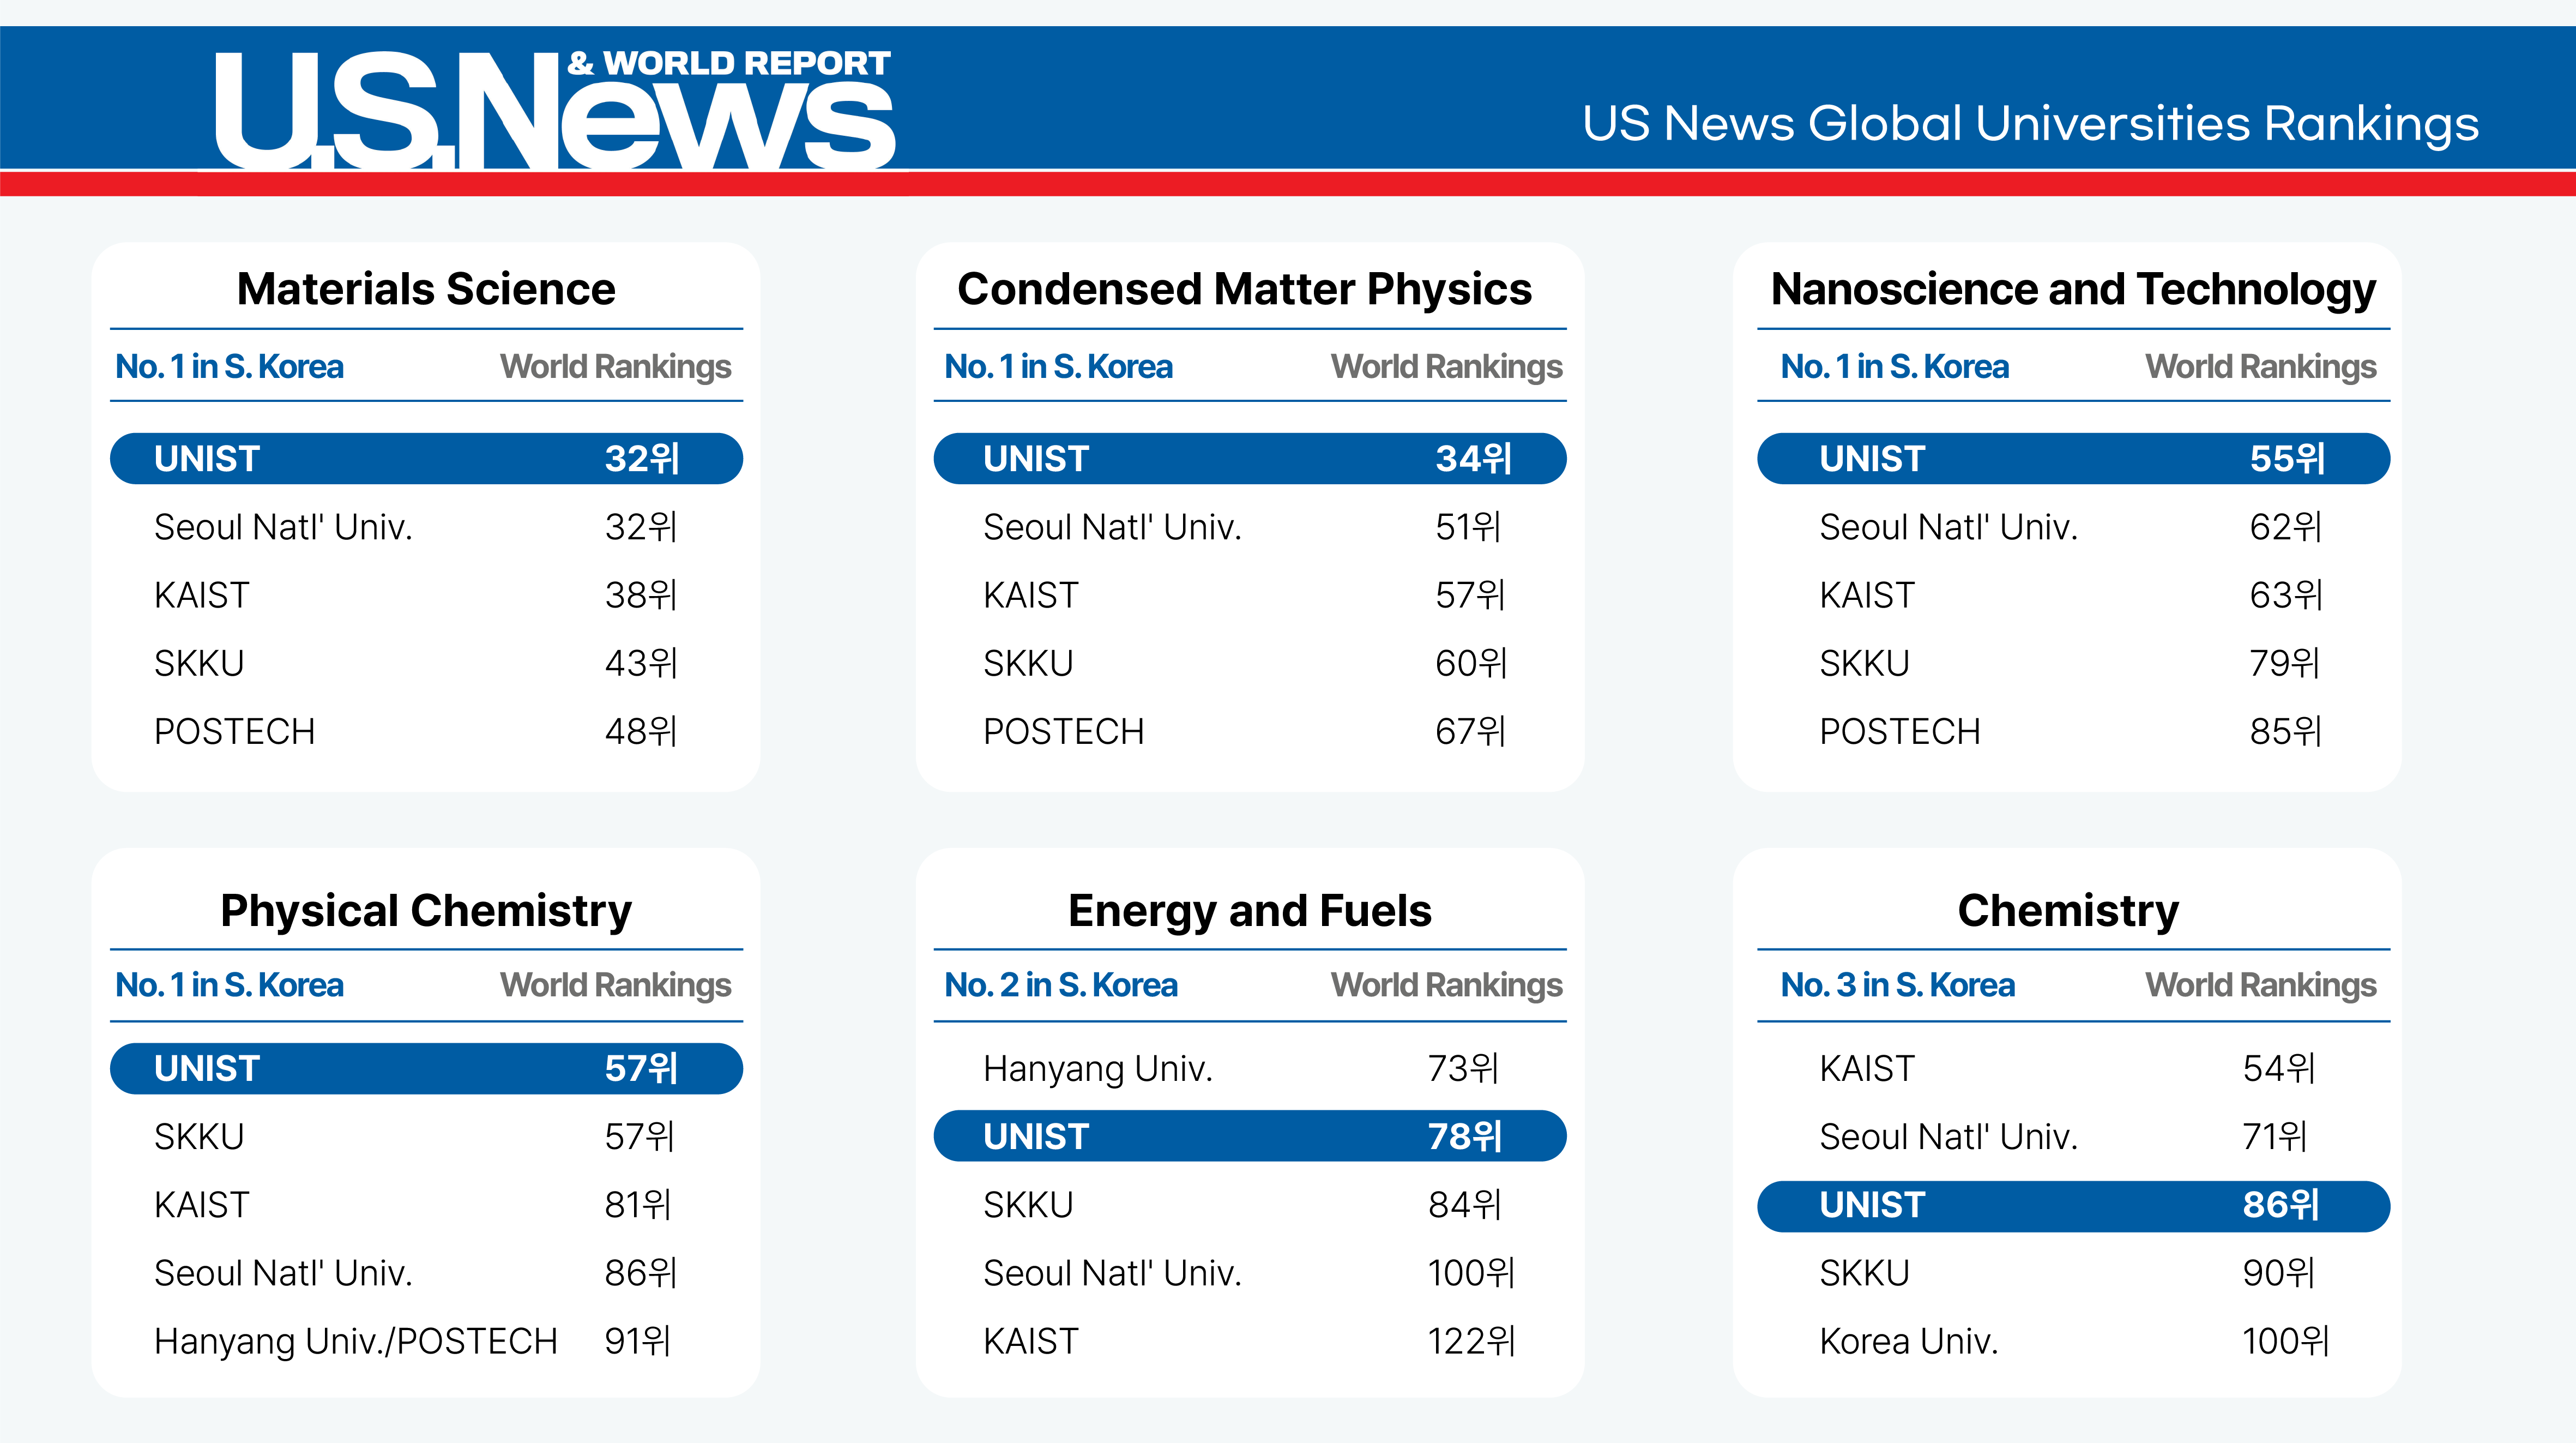 Image Credit: U.S News Rankings